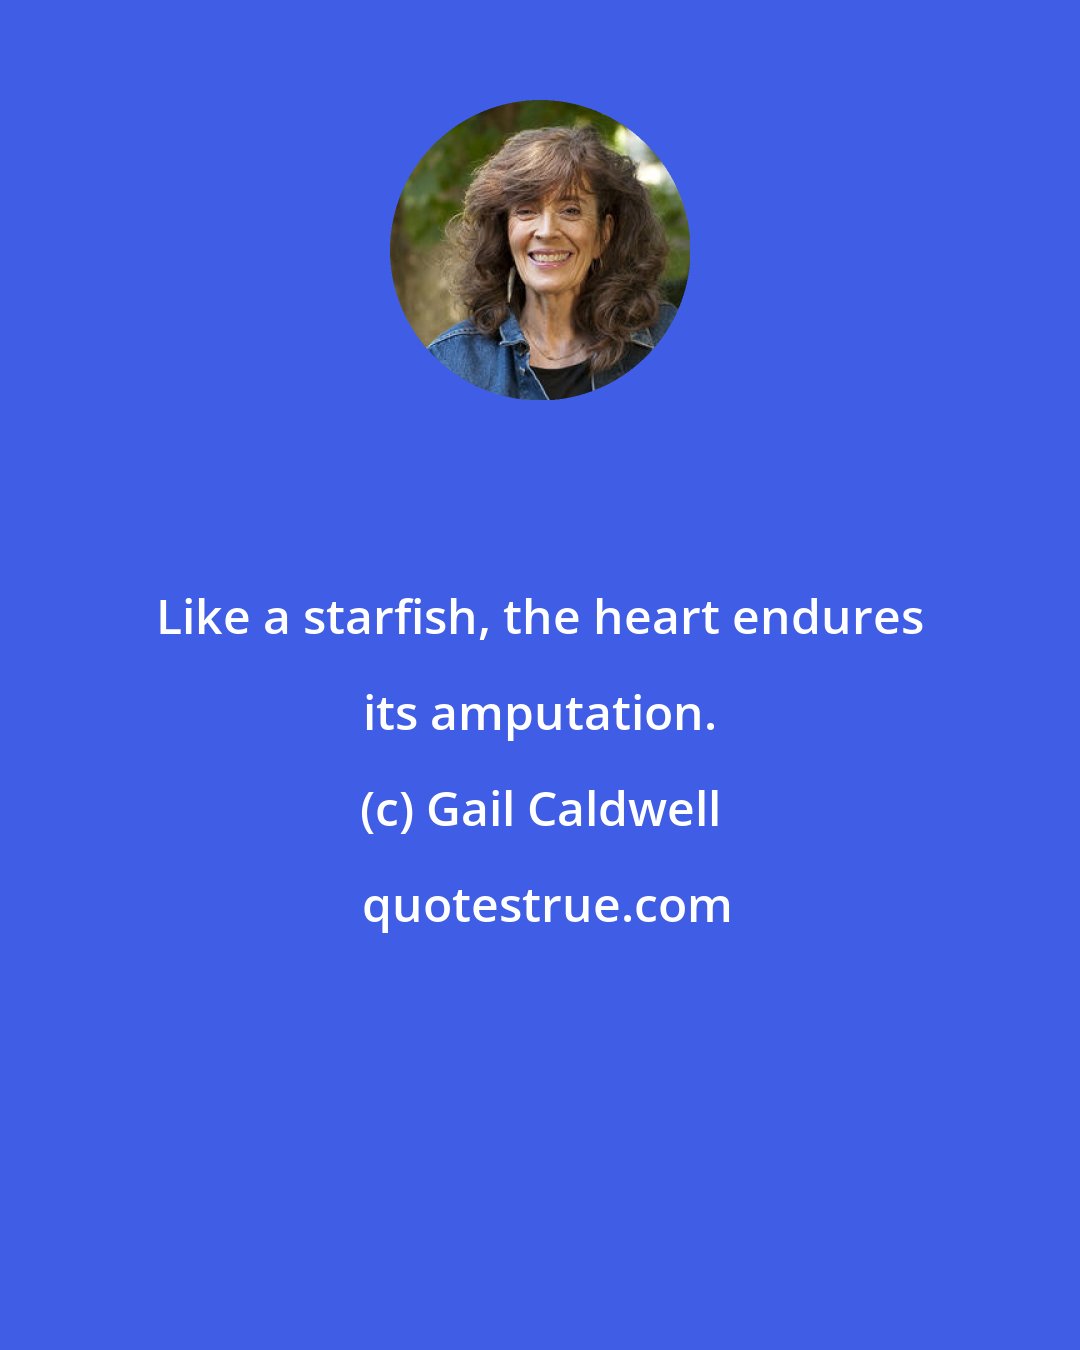 Gail Caldwell: Like a starfish, the heart endures its amputation.